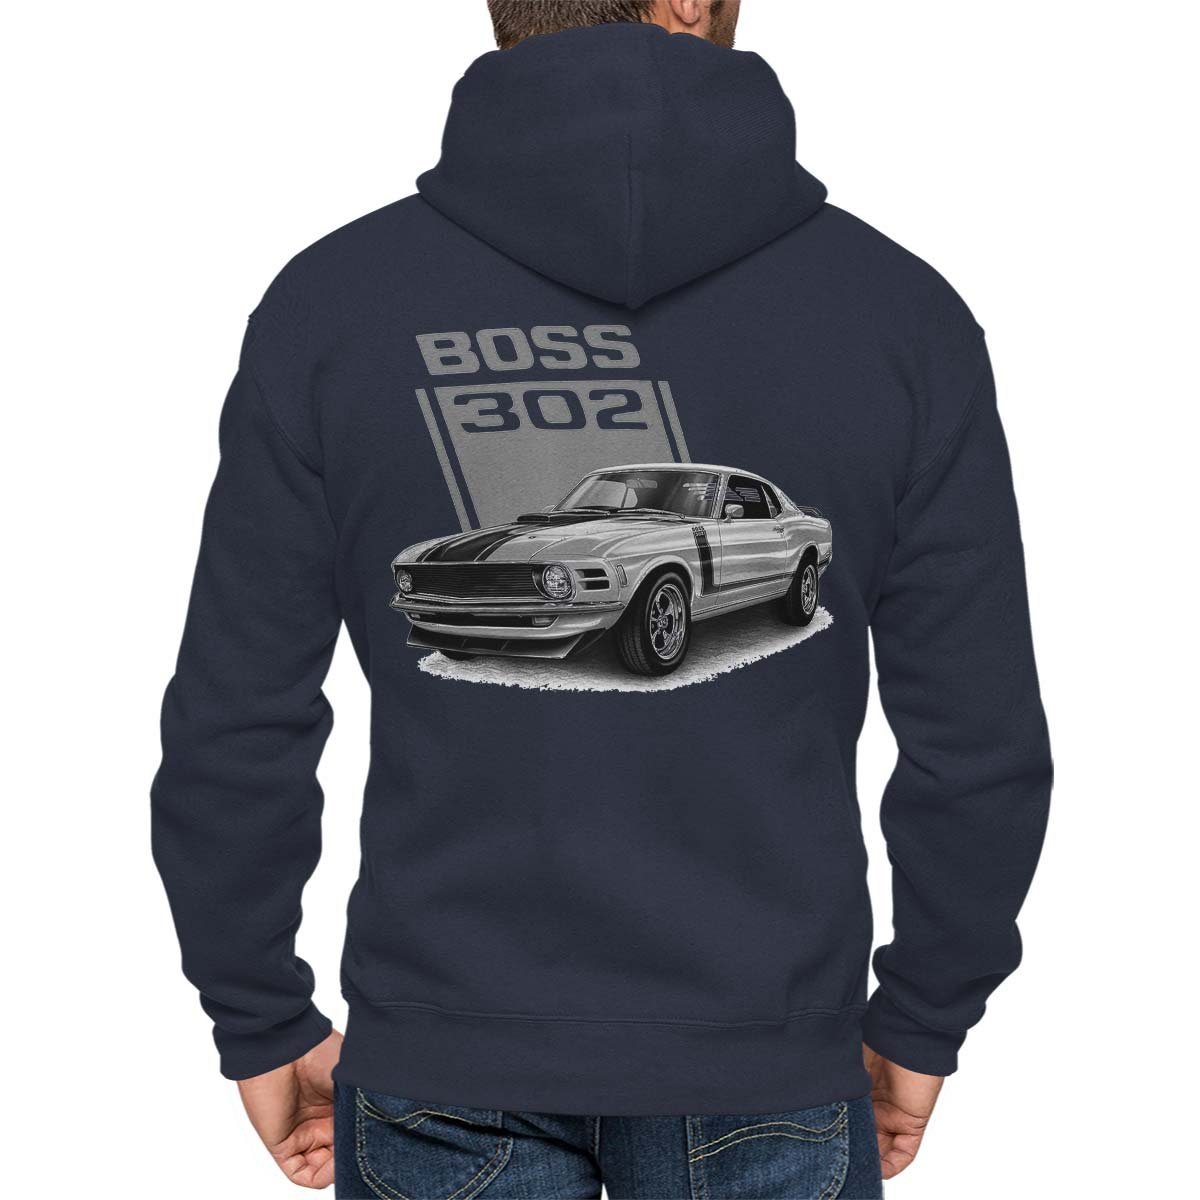 Rebel On Wheels Kapuzensweatjacke Kapuzenjacke Zip Hoodie Grey Muscle Car 302 mit Auto / US-Car Motiv Blau